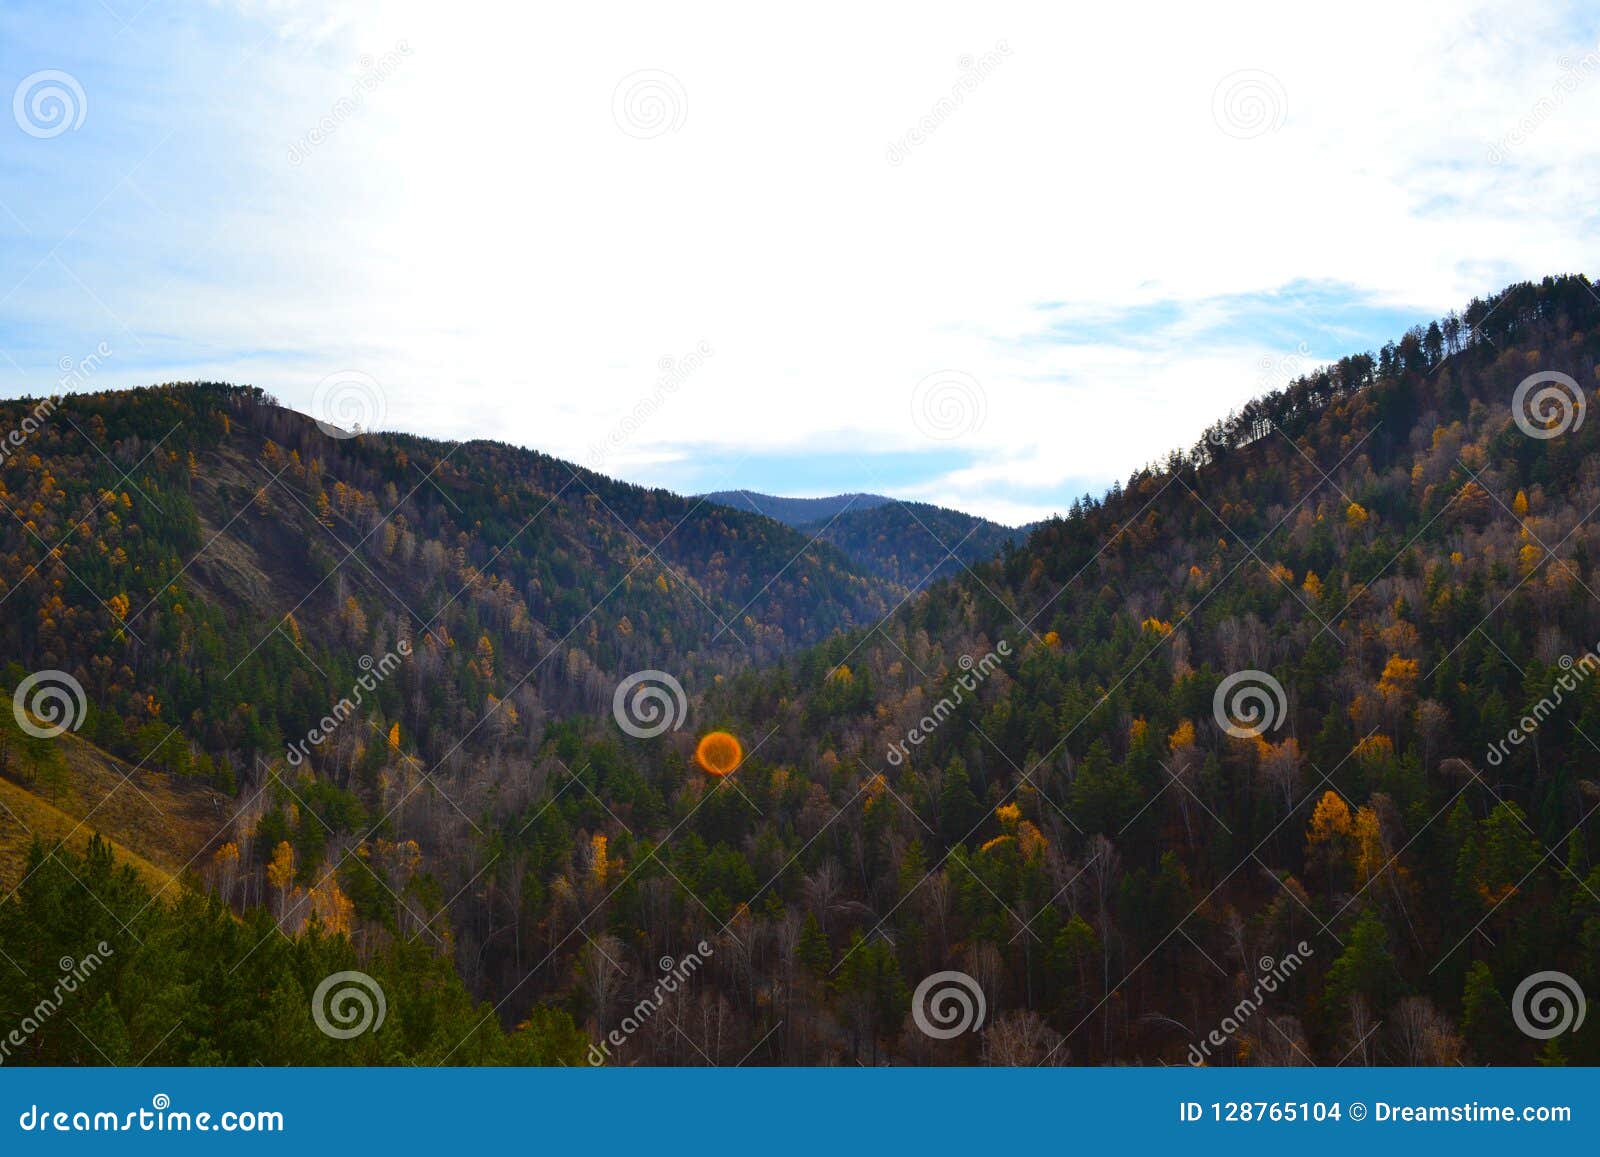 The Nature of Krasnoyarsk Region 3 Stock Photo - Image of region